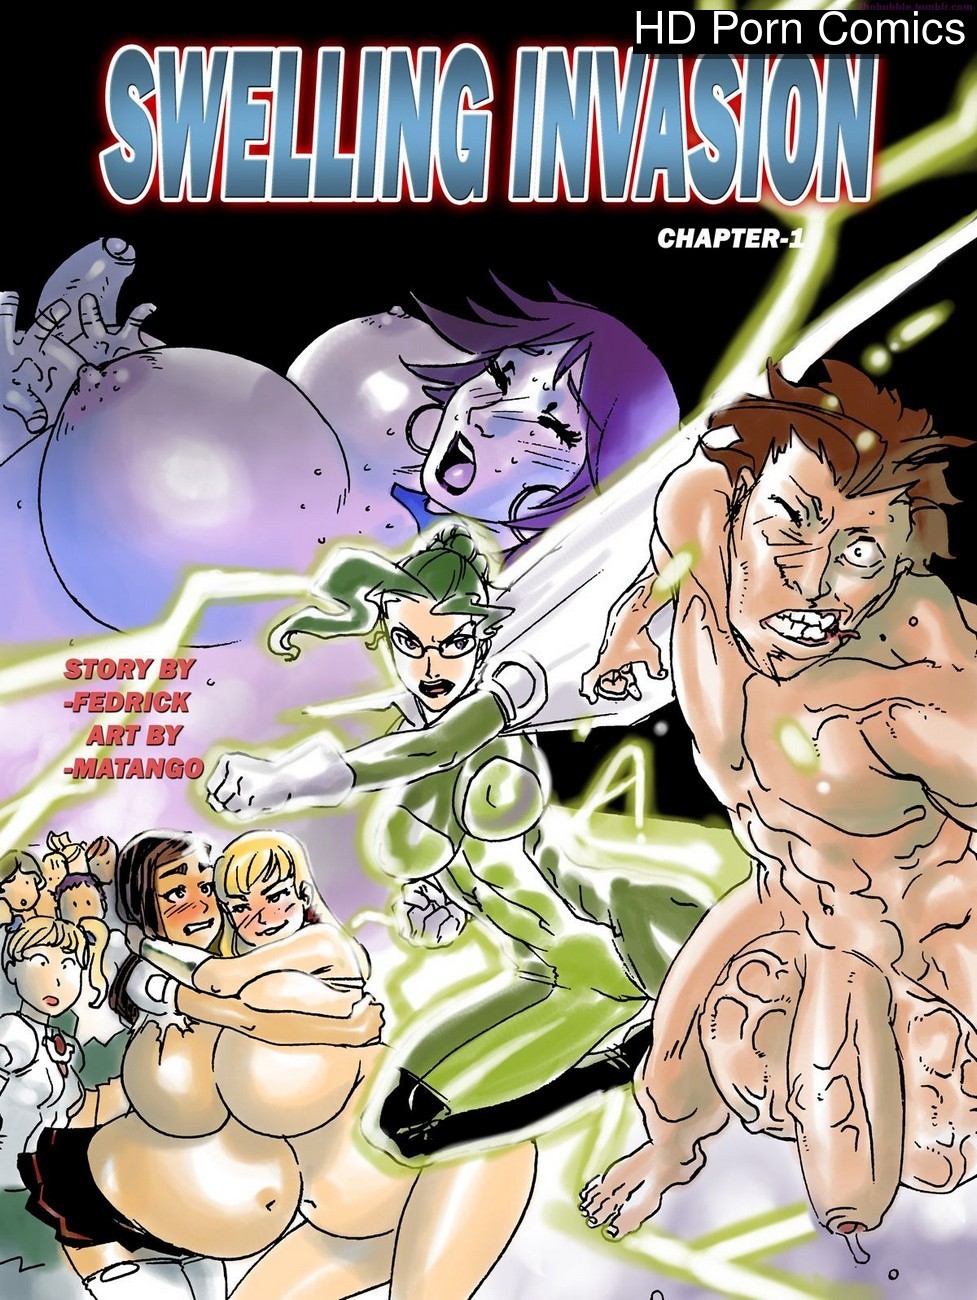 Swelling Invasion 1 Sex Comic - HD Porn Comics